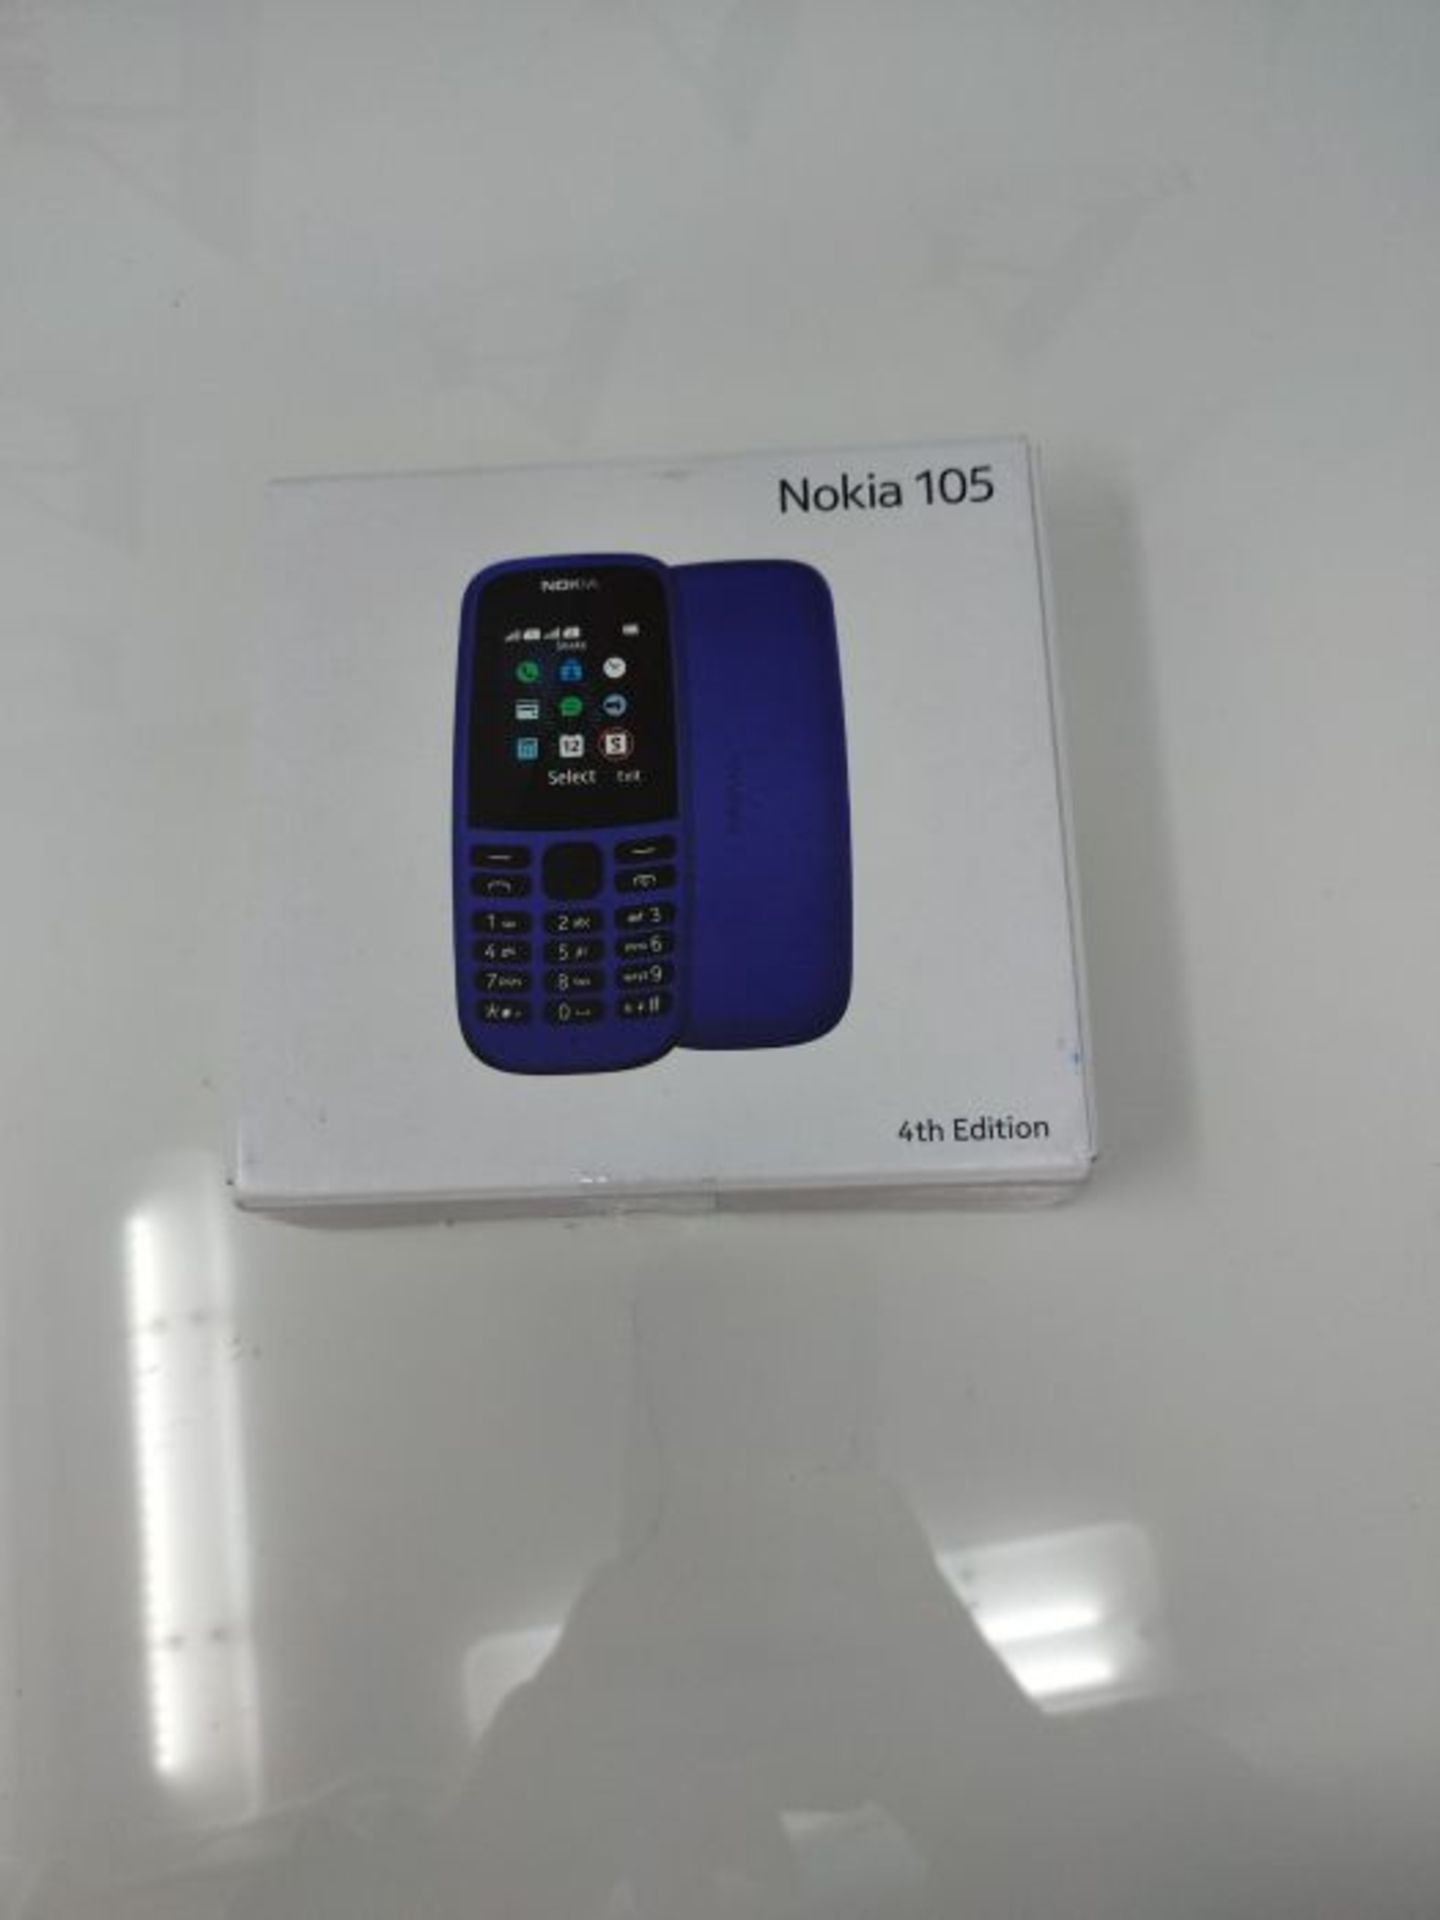 Nokia 105 Mobiltelefon (1, 8 Zoll Farbdisplay, FM Radio, 4 MB ROM, Dual-Sim) Schwarz, - Image 2 of 3